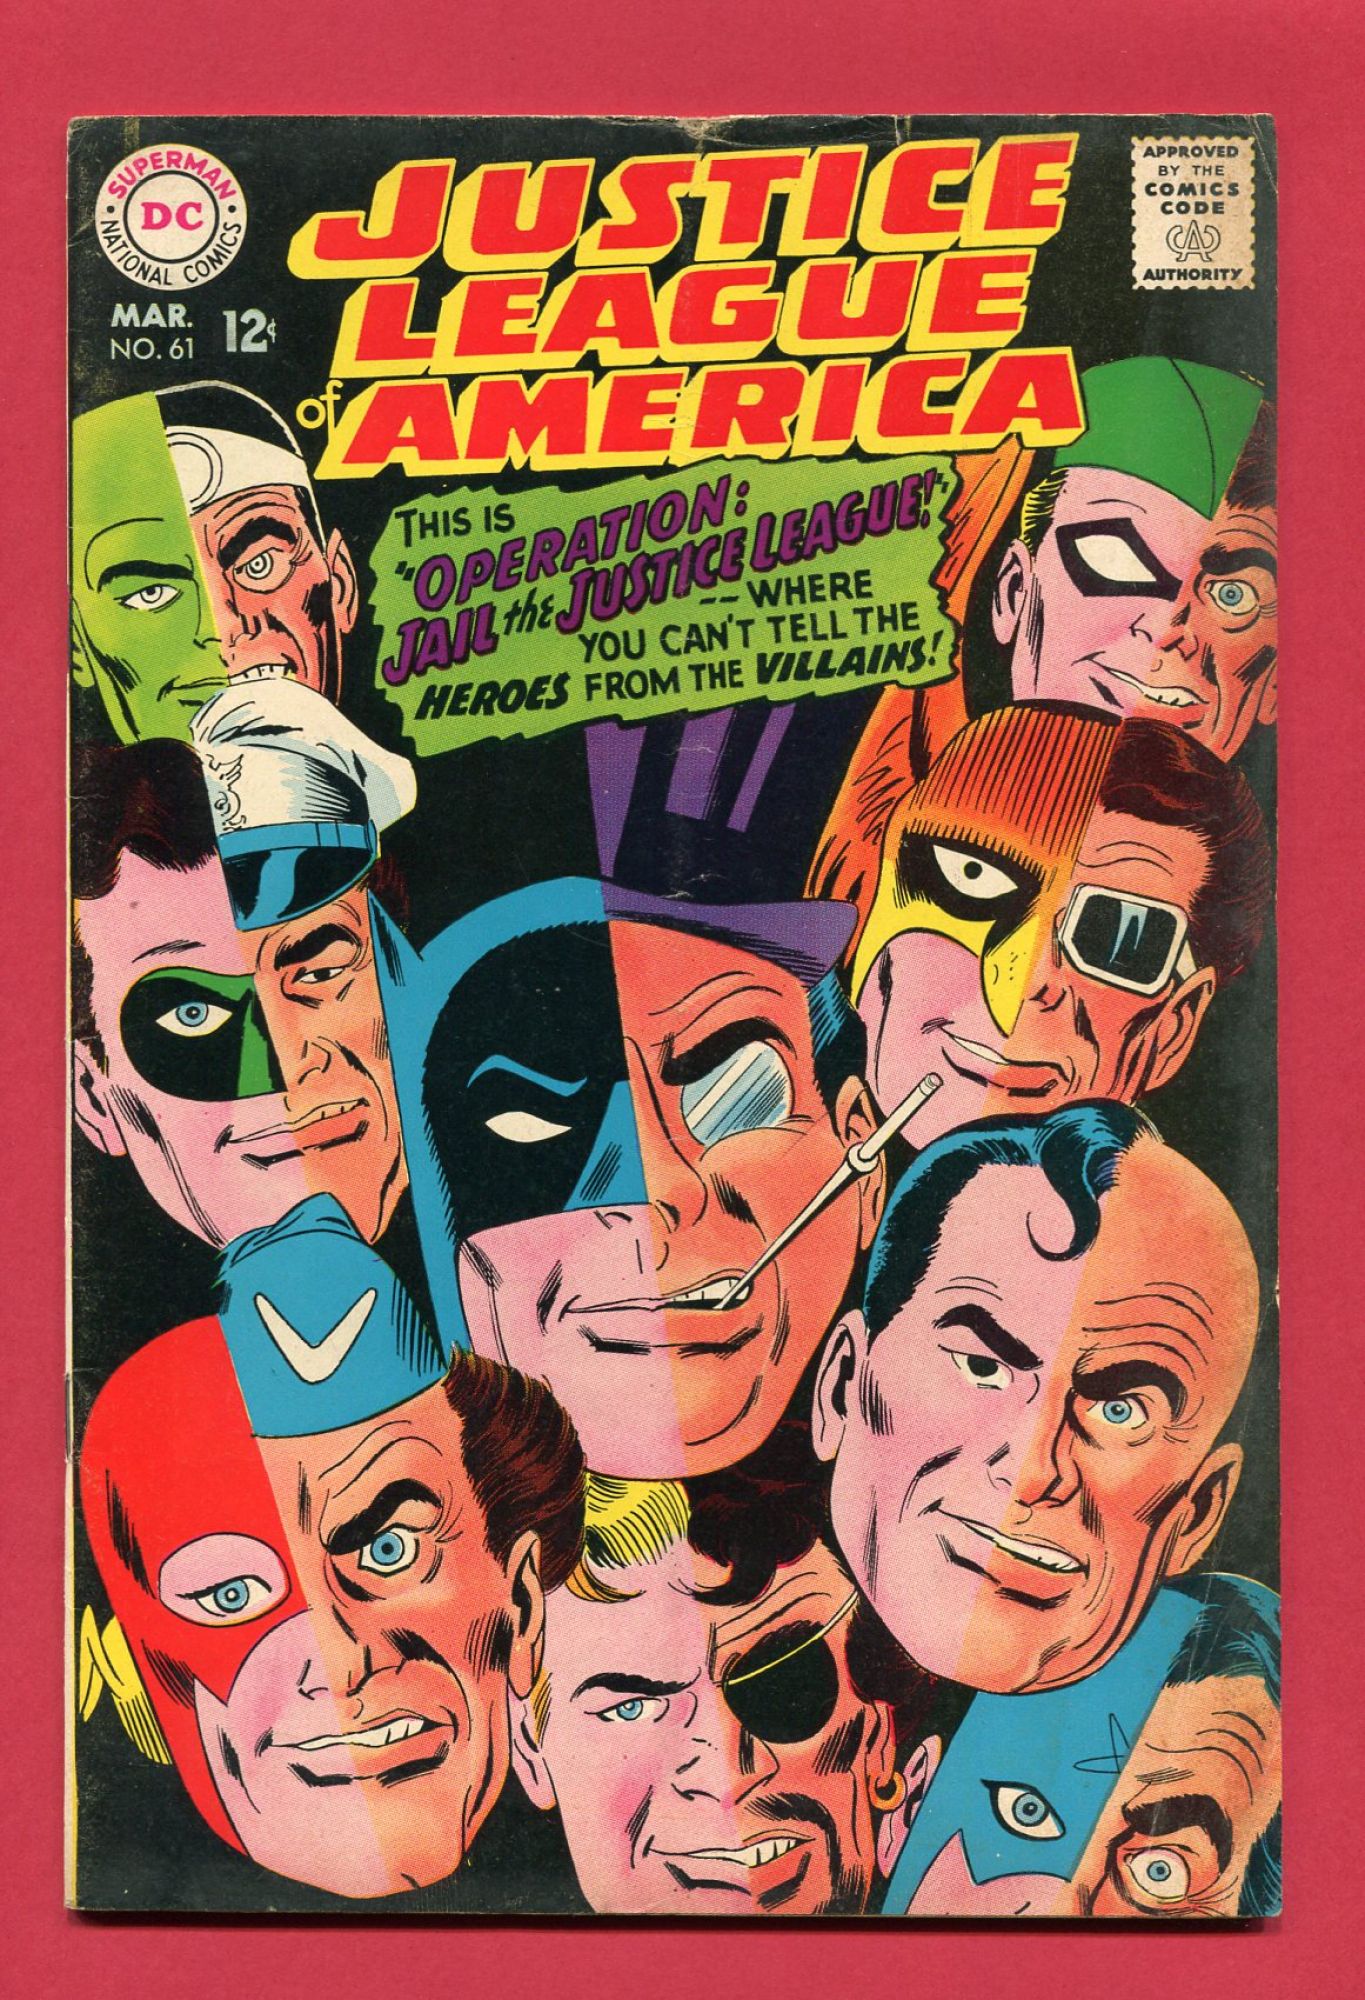 Justice League of America #61, Mar 1968, 6.0 FN